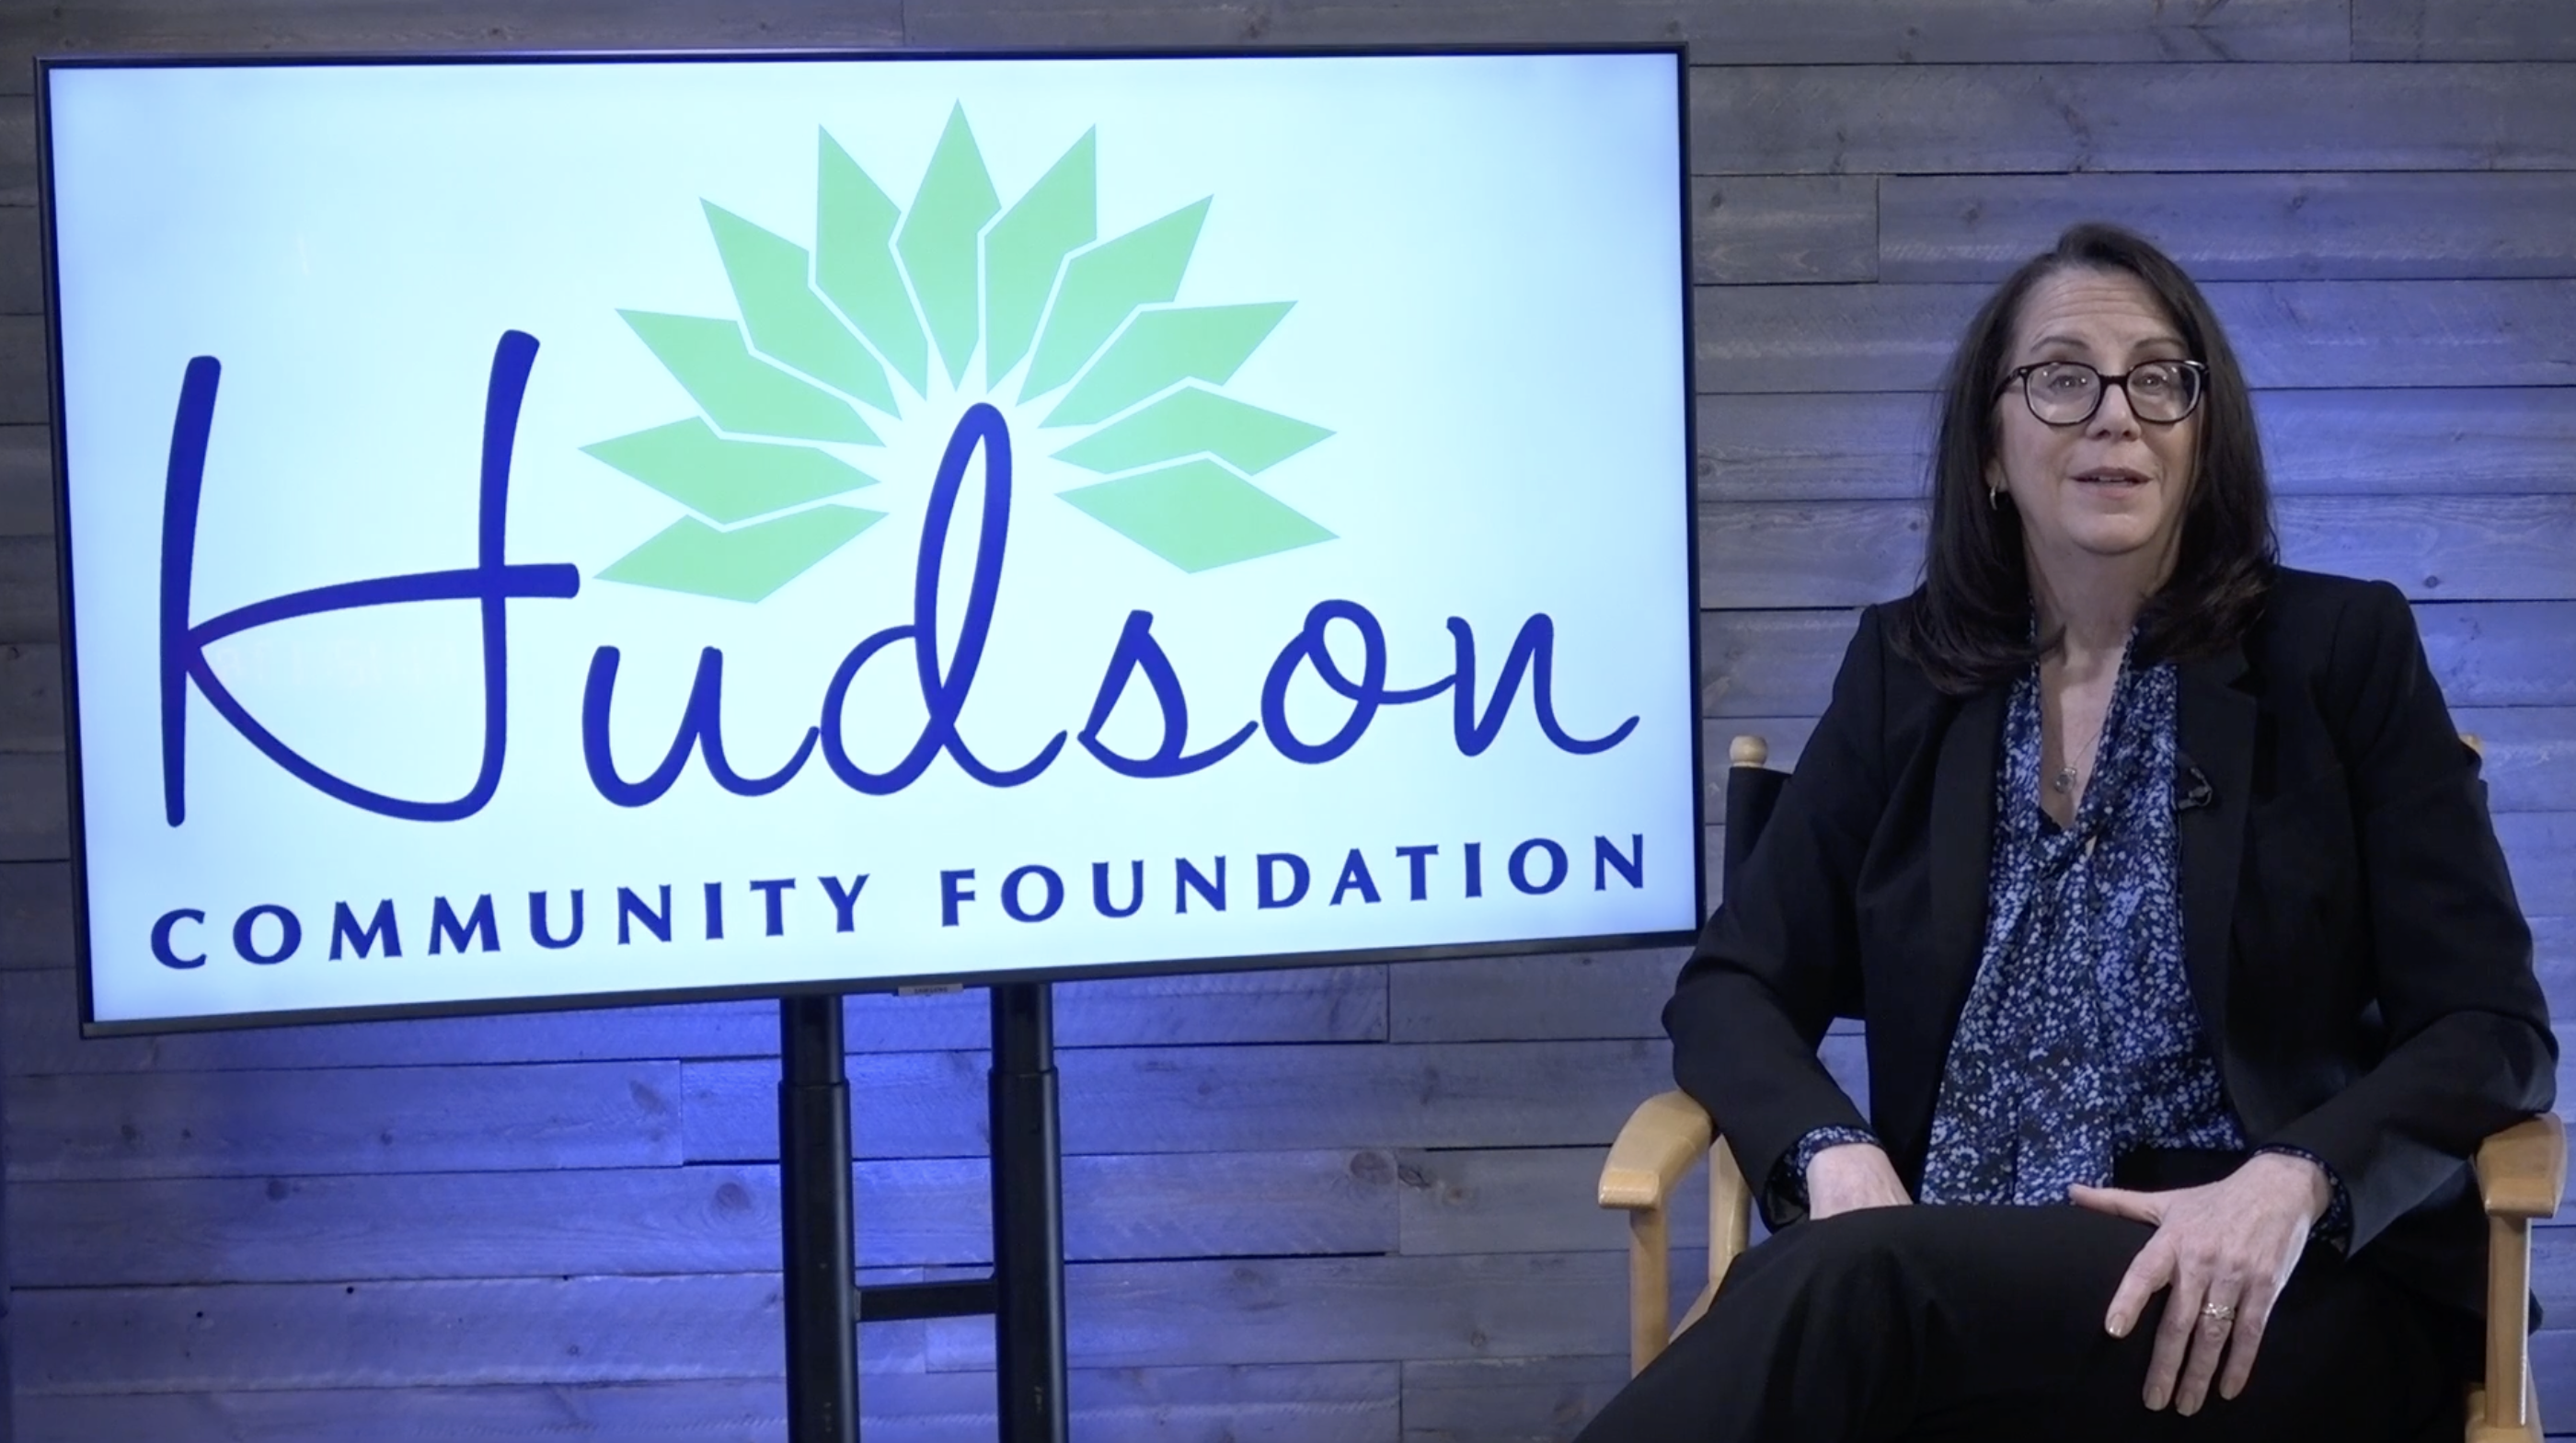 Forum Spotlight: Hudson Community Foundation